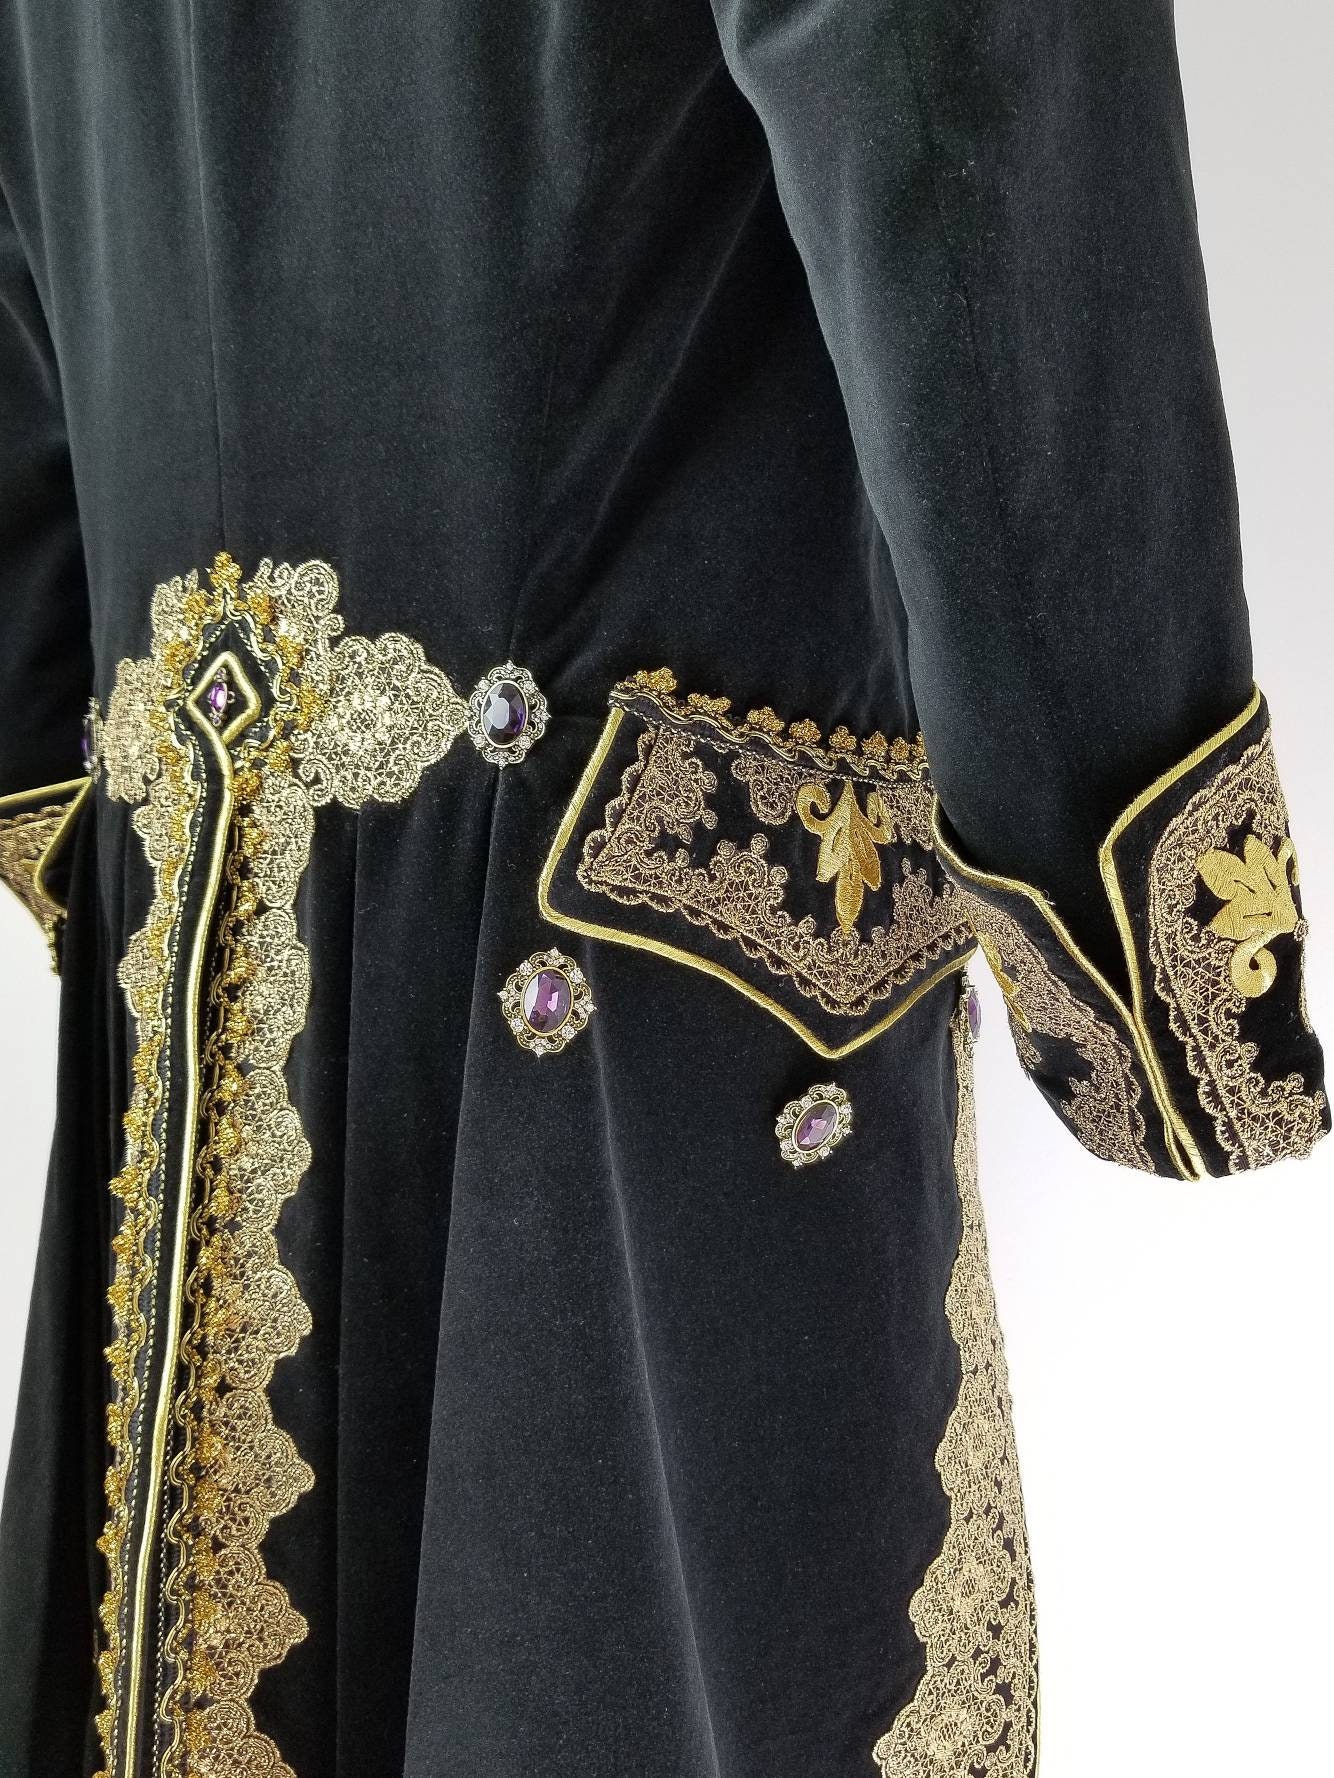 Rococo Costume 18th Century Frock Coat18th Century Men's - Etsy